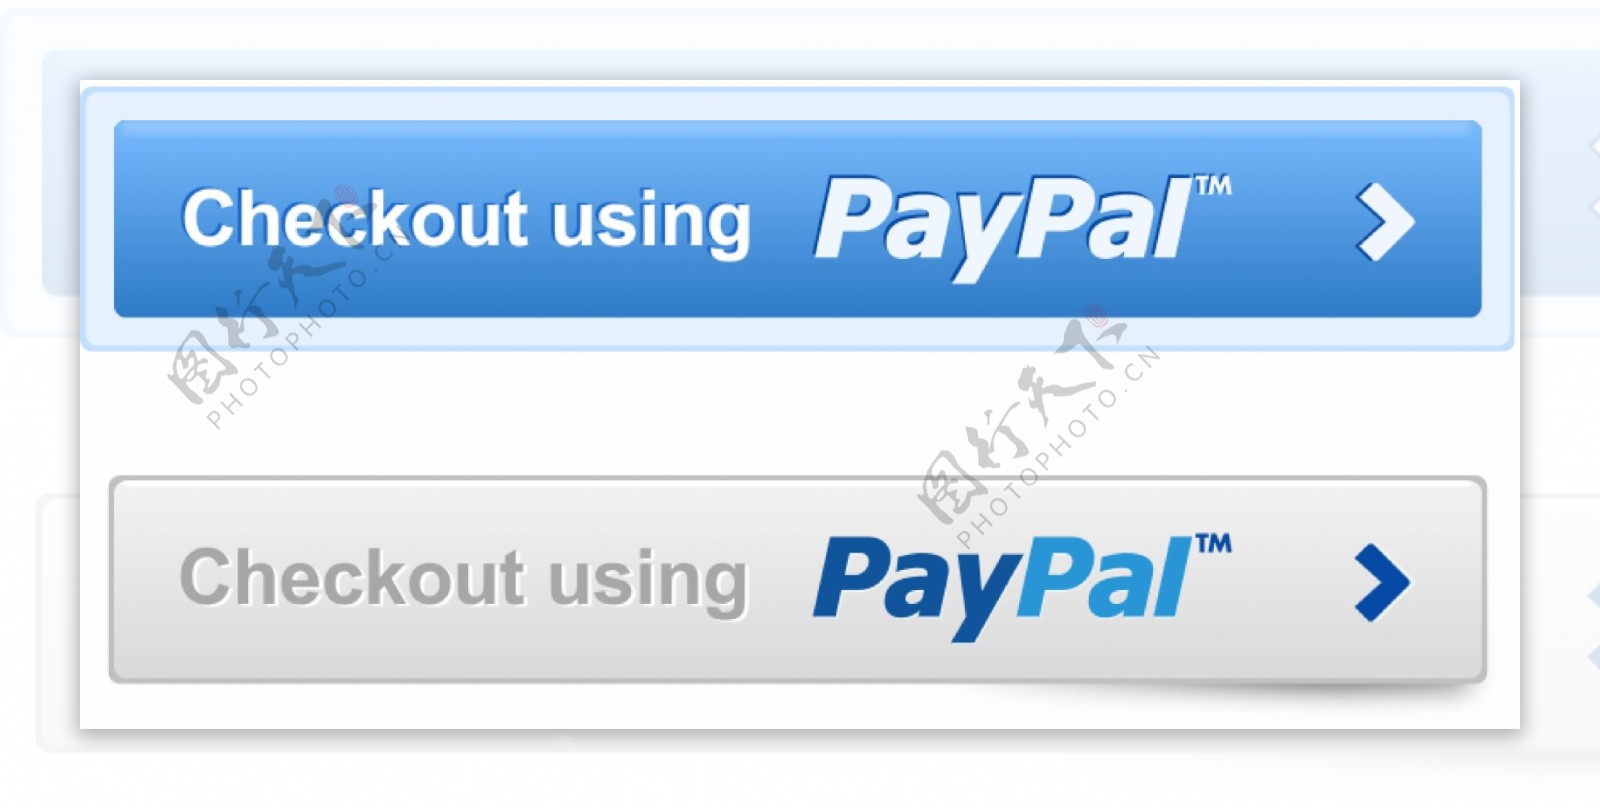 PayPal付款结帐向量按钮设置